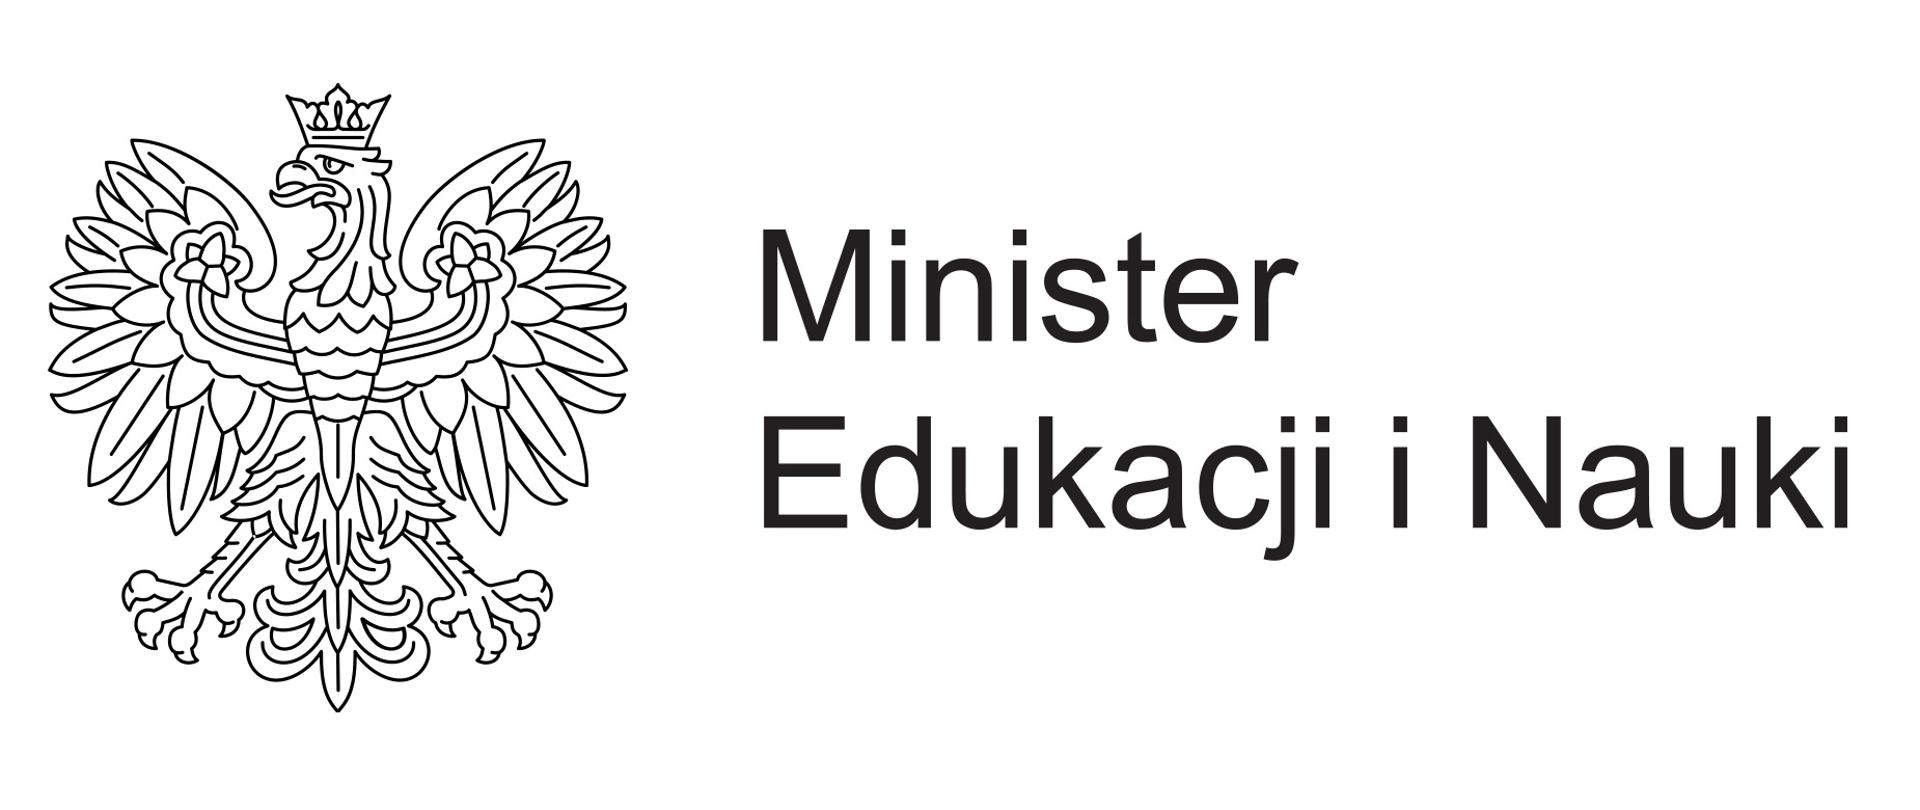 Logo - polski orzeł i napis Minister Edukacji i Nauki